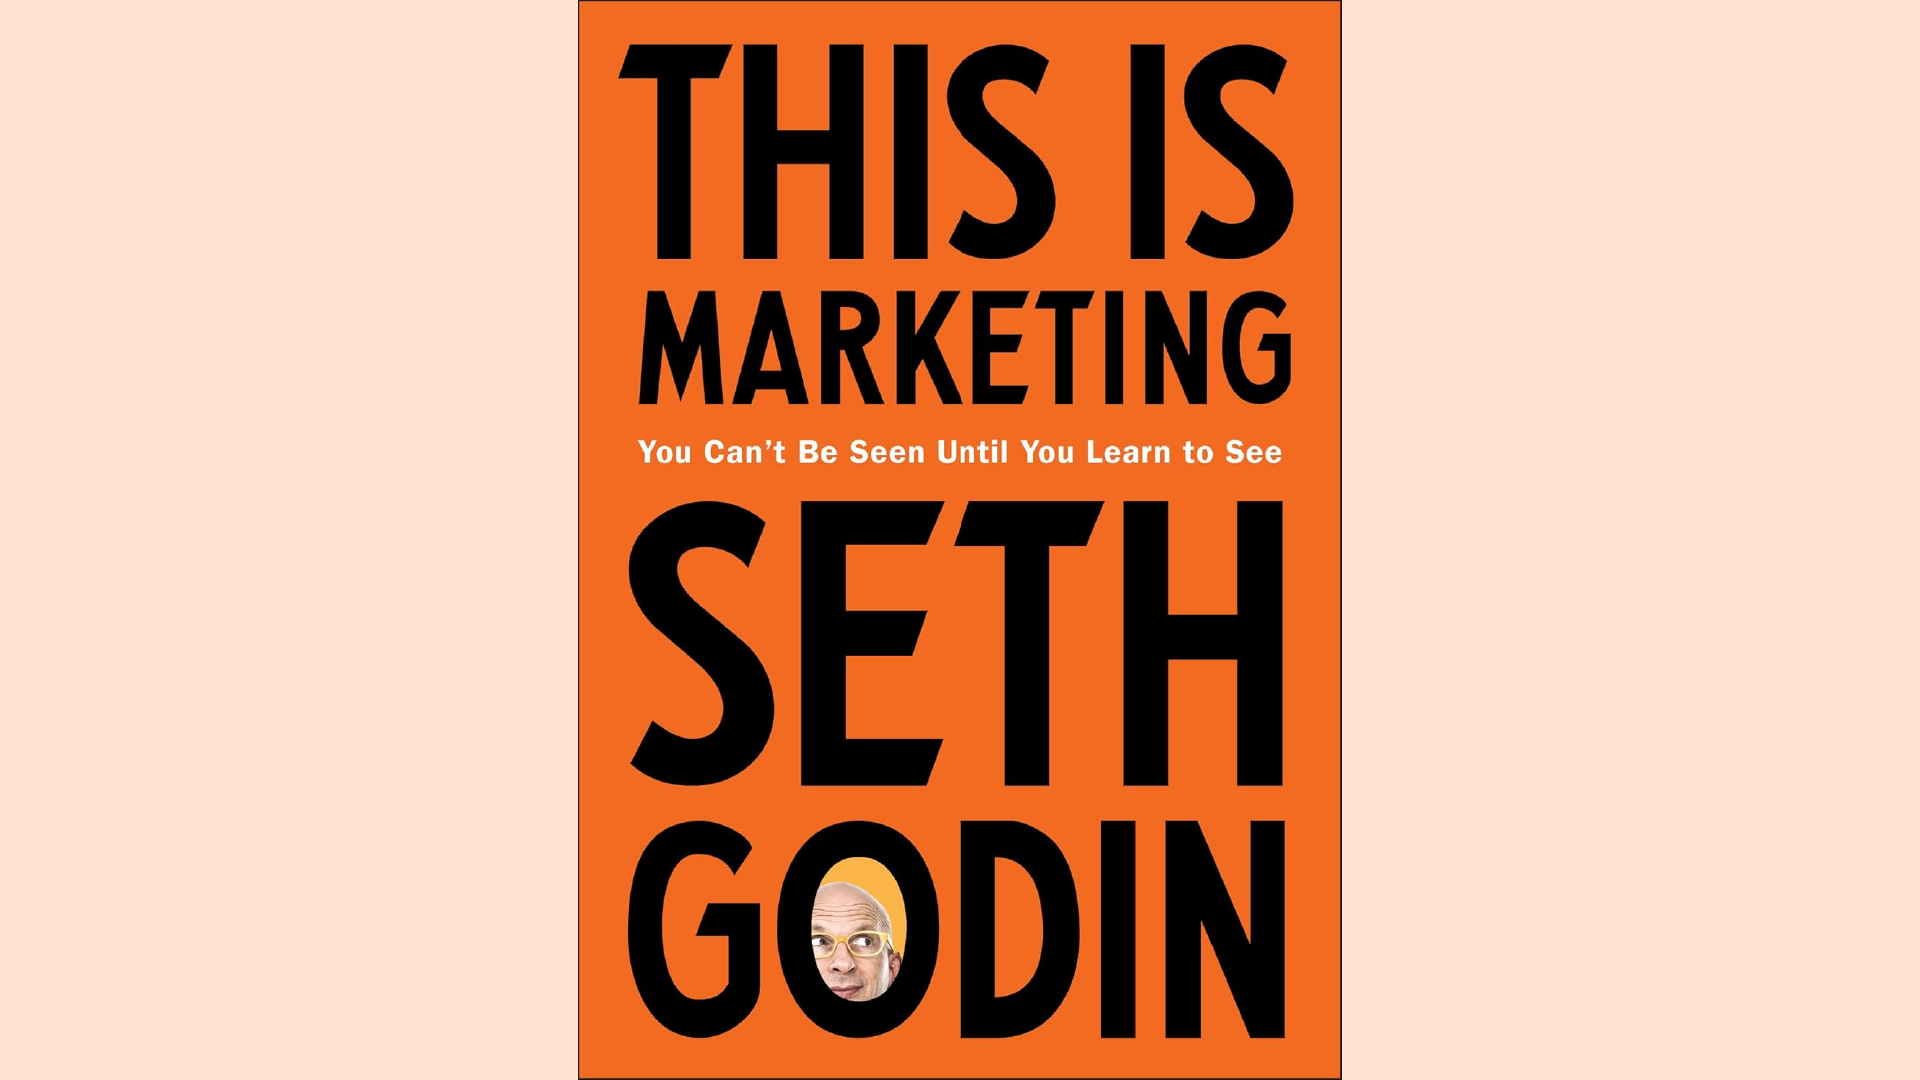 Summary: This is Marketing by Seth Godin